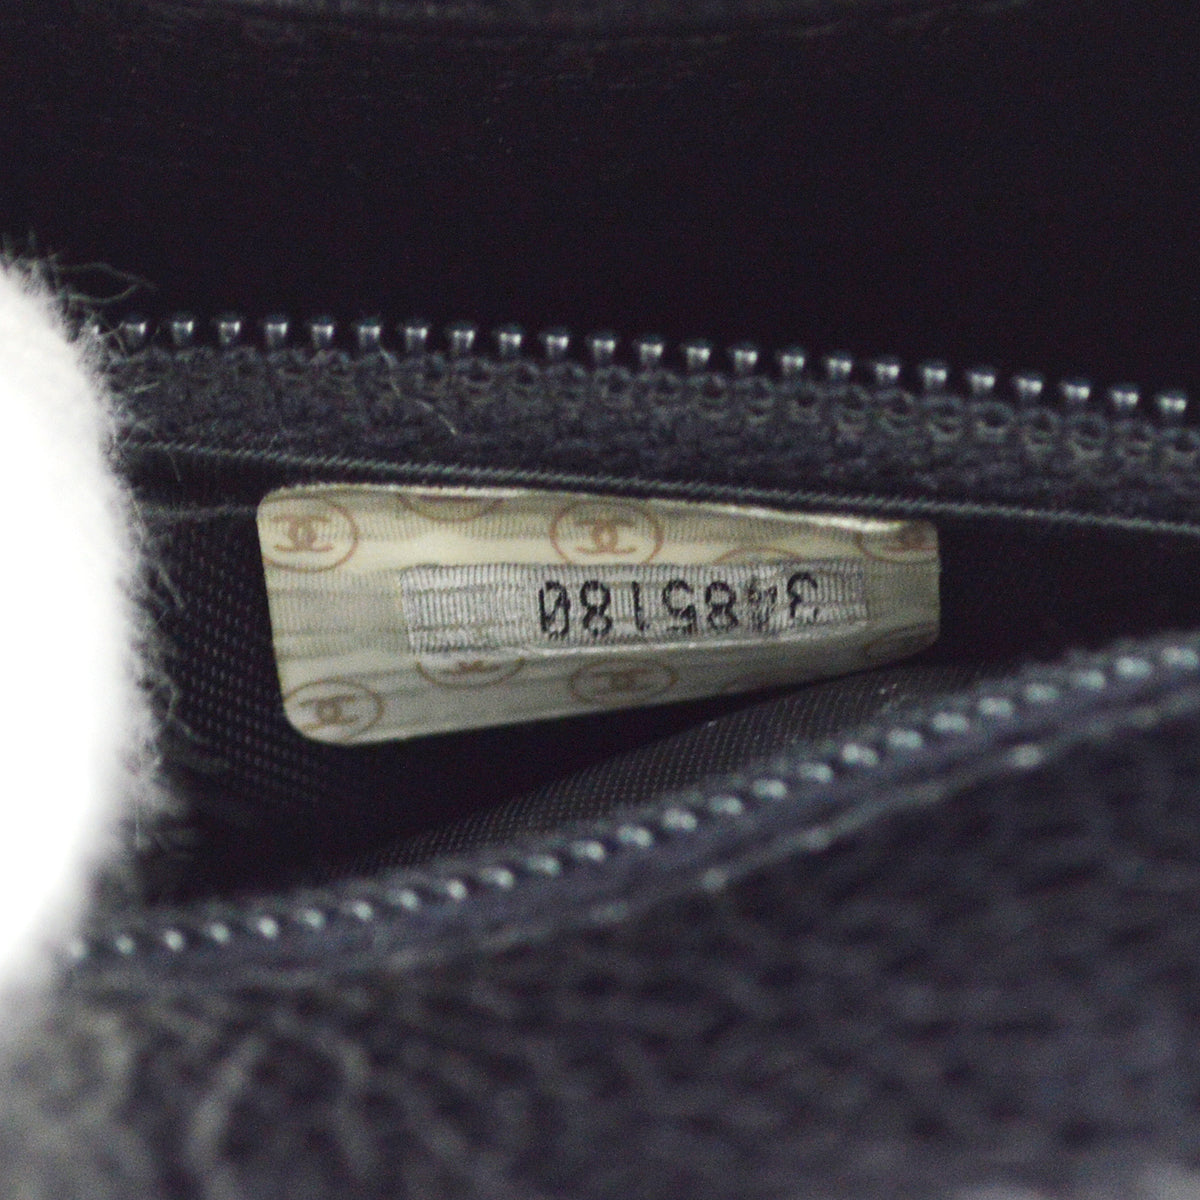 Chanel Black Caviar Belt Bum Bag 